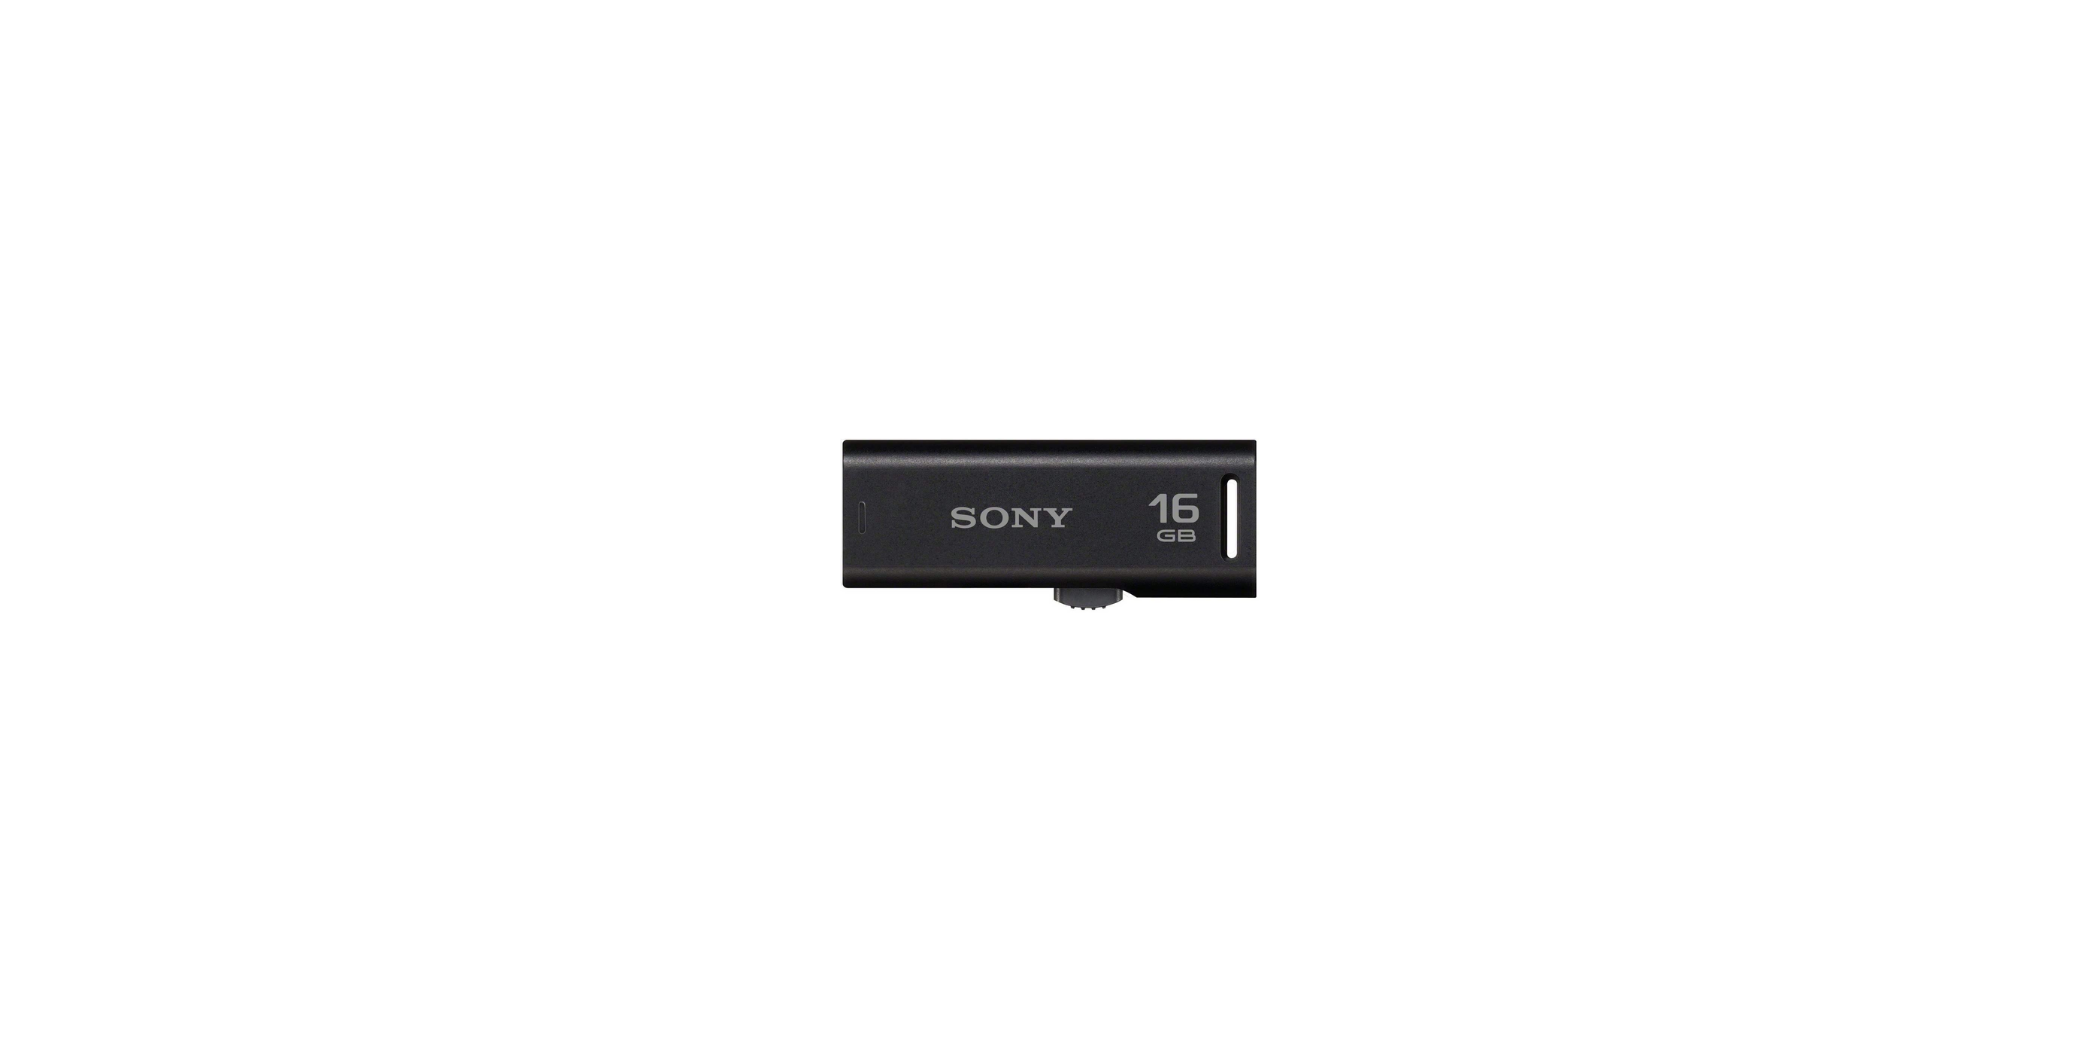 Sony USM16GRB 16GB Black